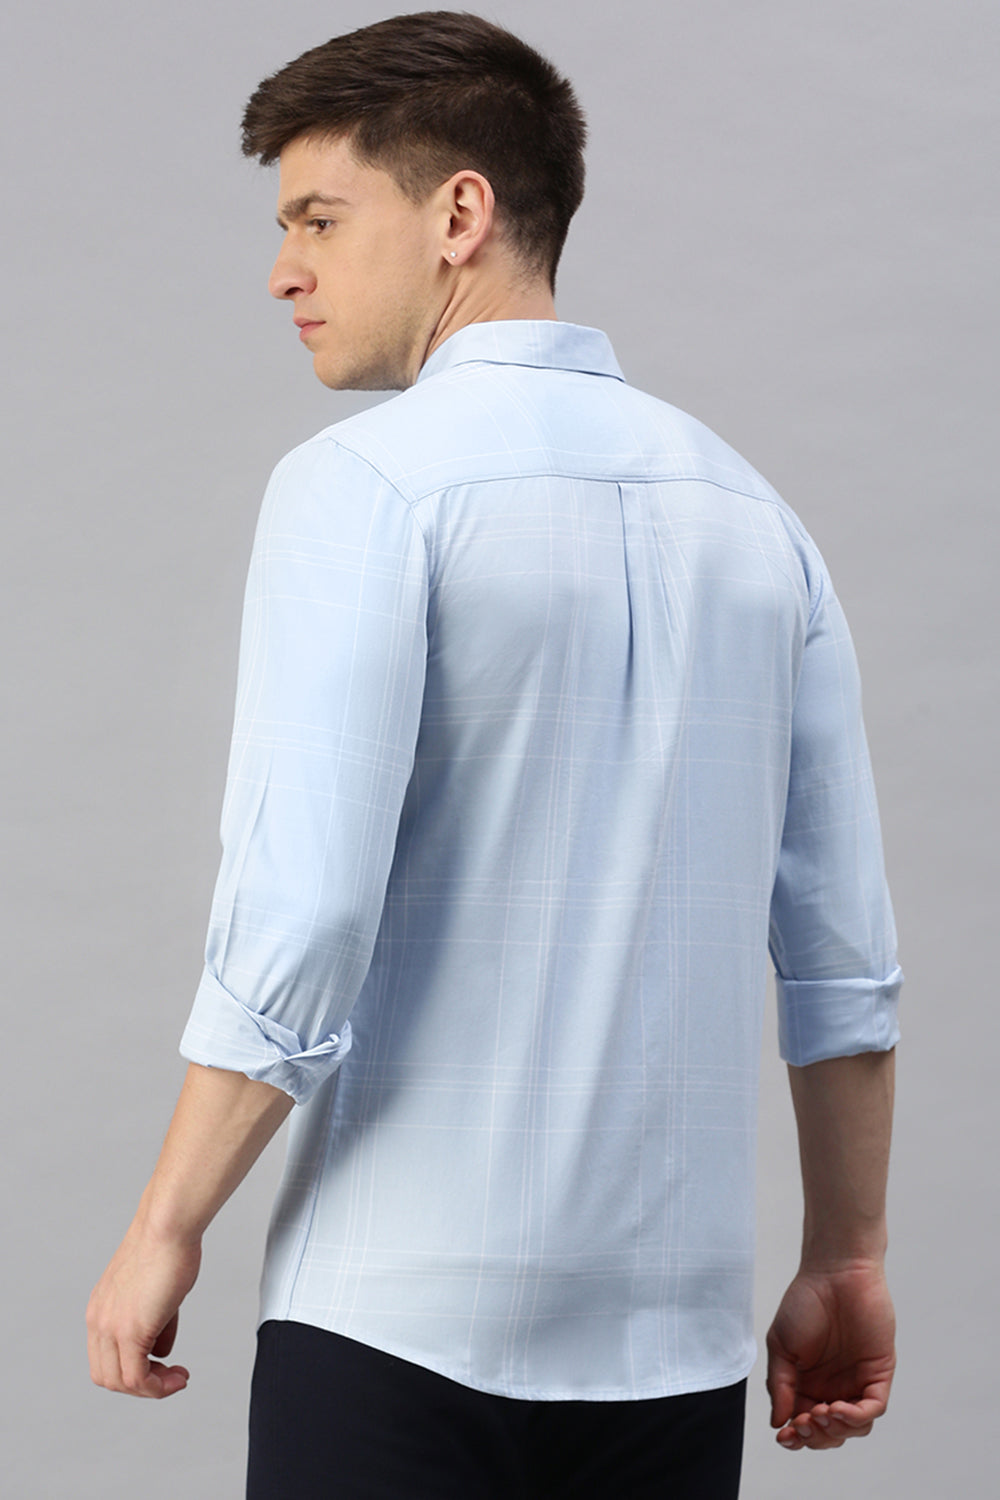 CP BRO Men's Cotton Full Sleeve Checked Slim Fit Polo Neck Light Blue Color Woven Shirt | Sbo1-43 A